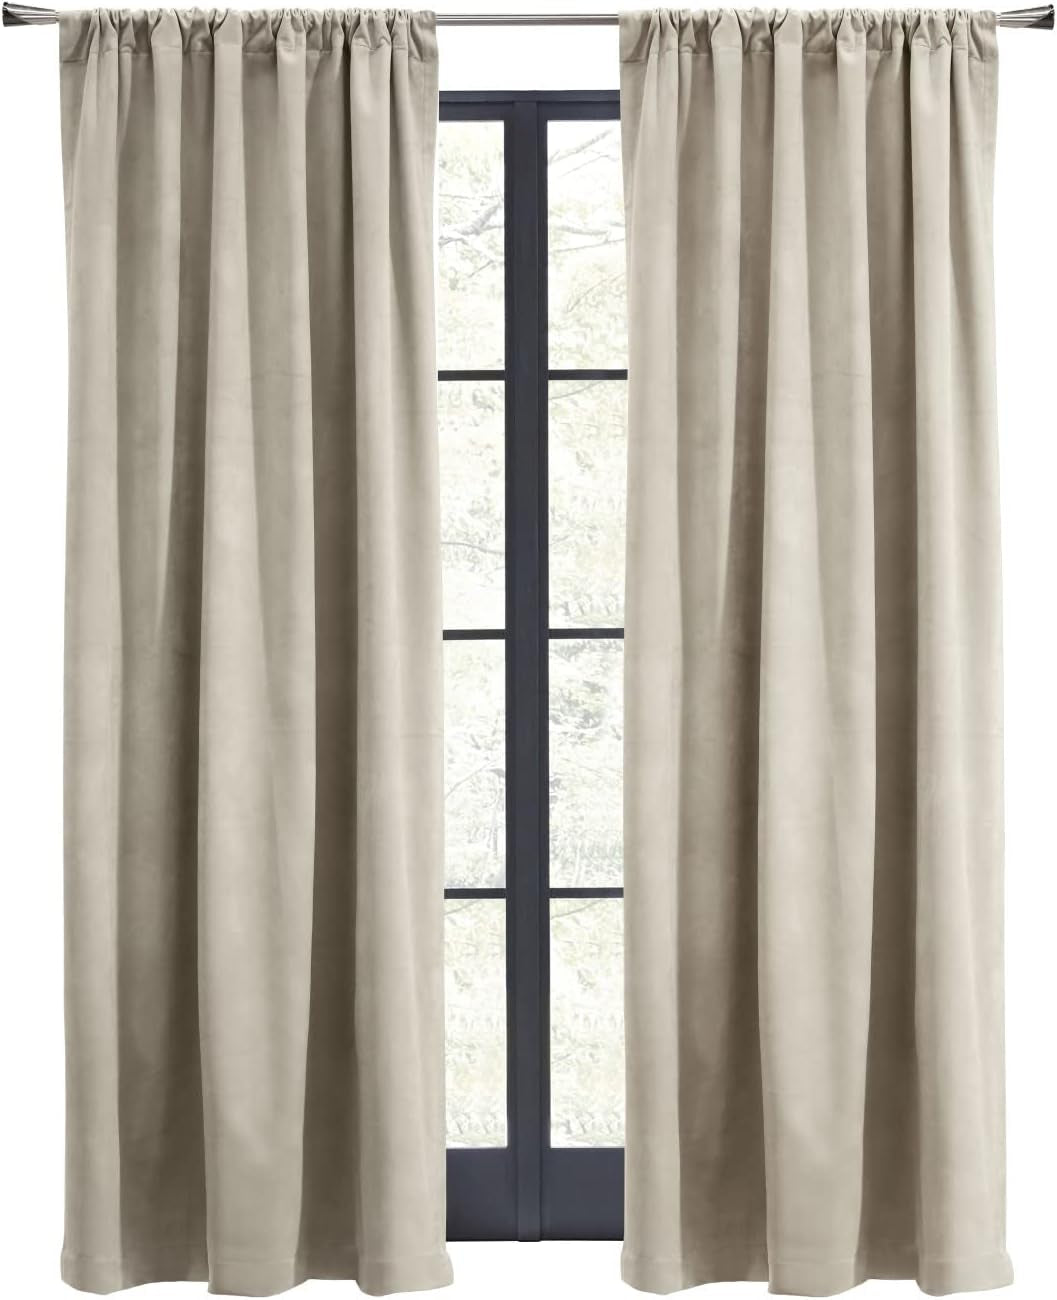 Loft Living Savannah Room Darkening Velvet Dual Header Curtain Panel 50" X 84" in Oyster  Commonwealth Home Fashions   